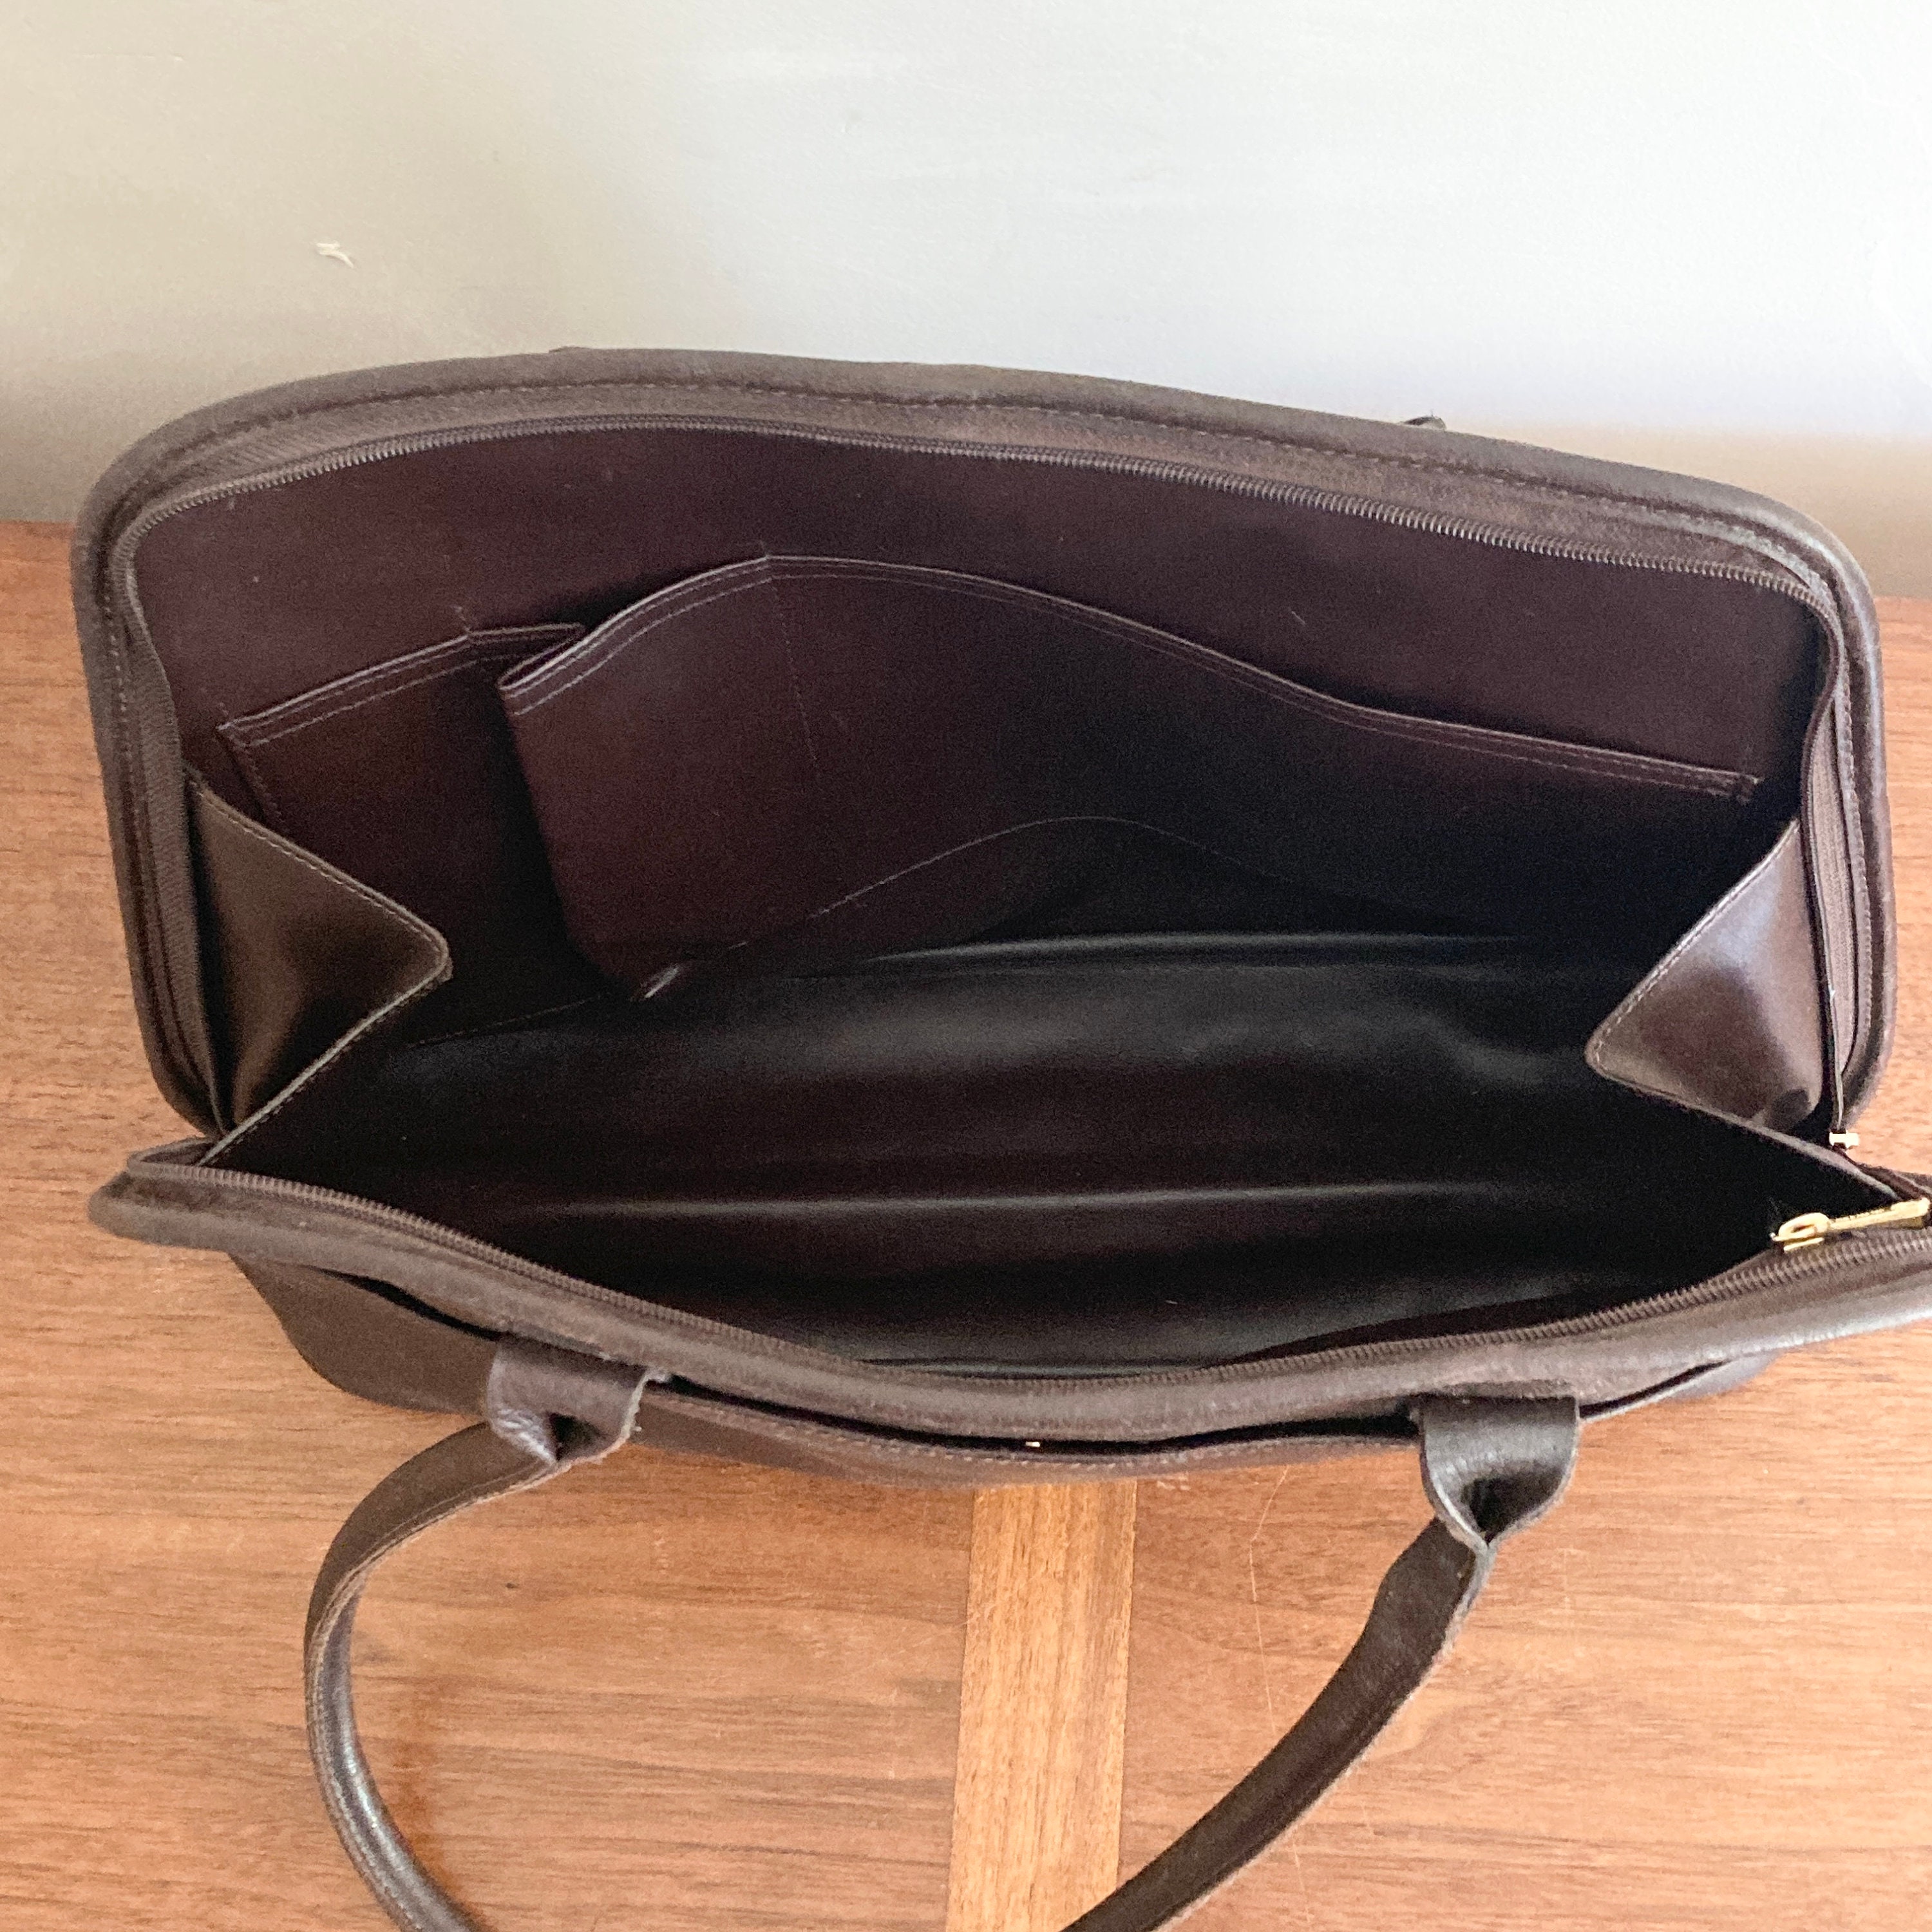 Longchamp Roseau shoulder bag - ShopStyle